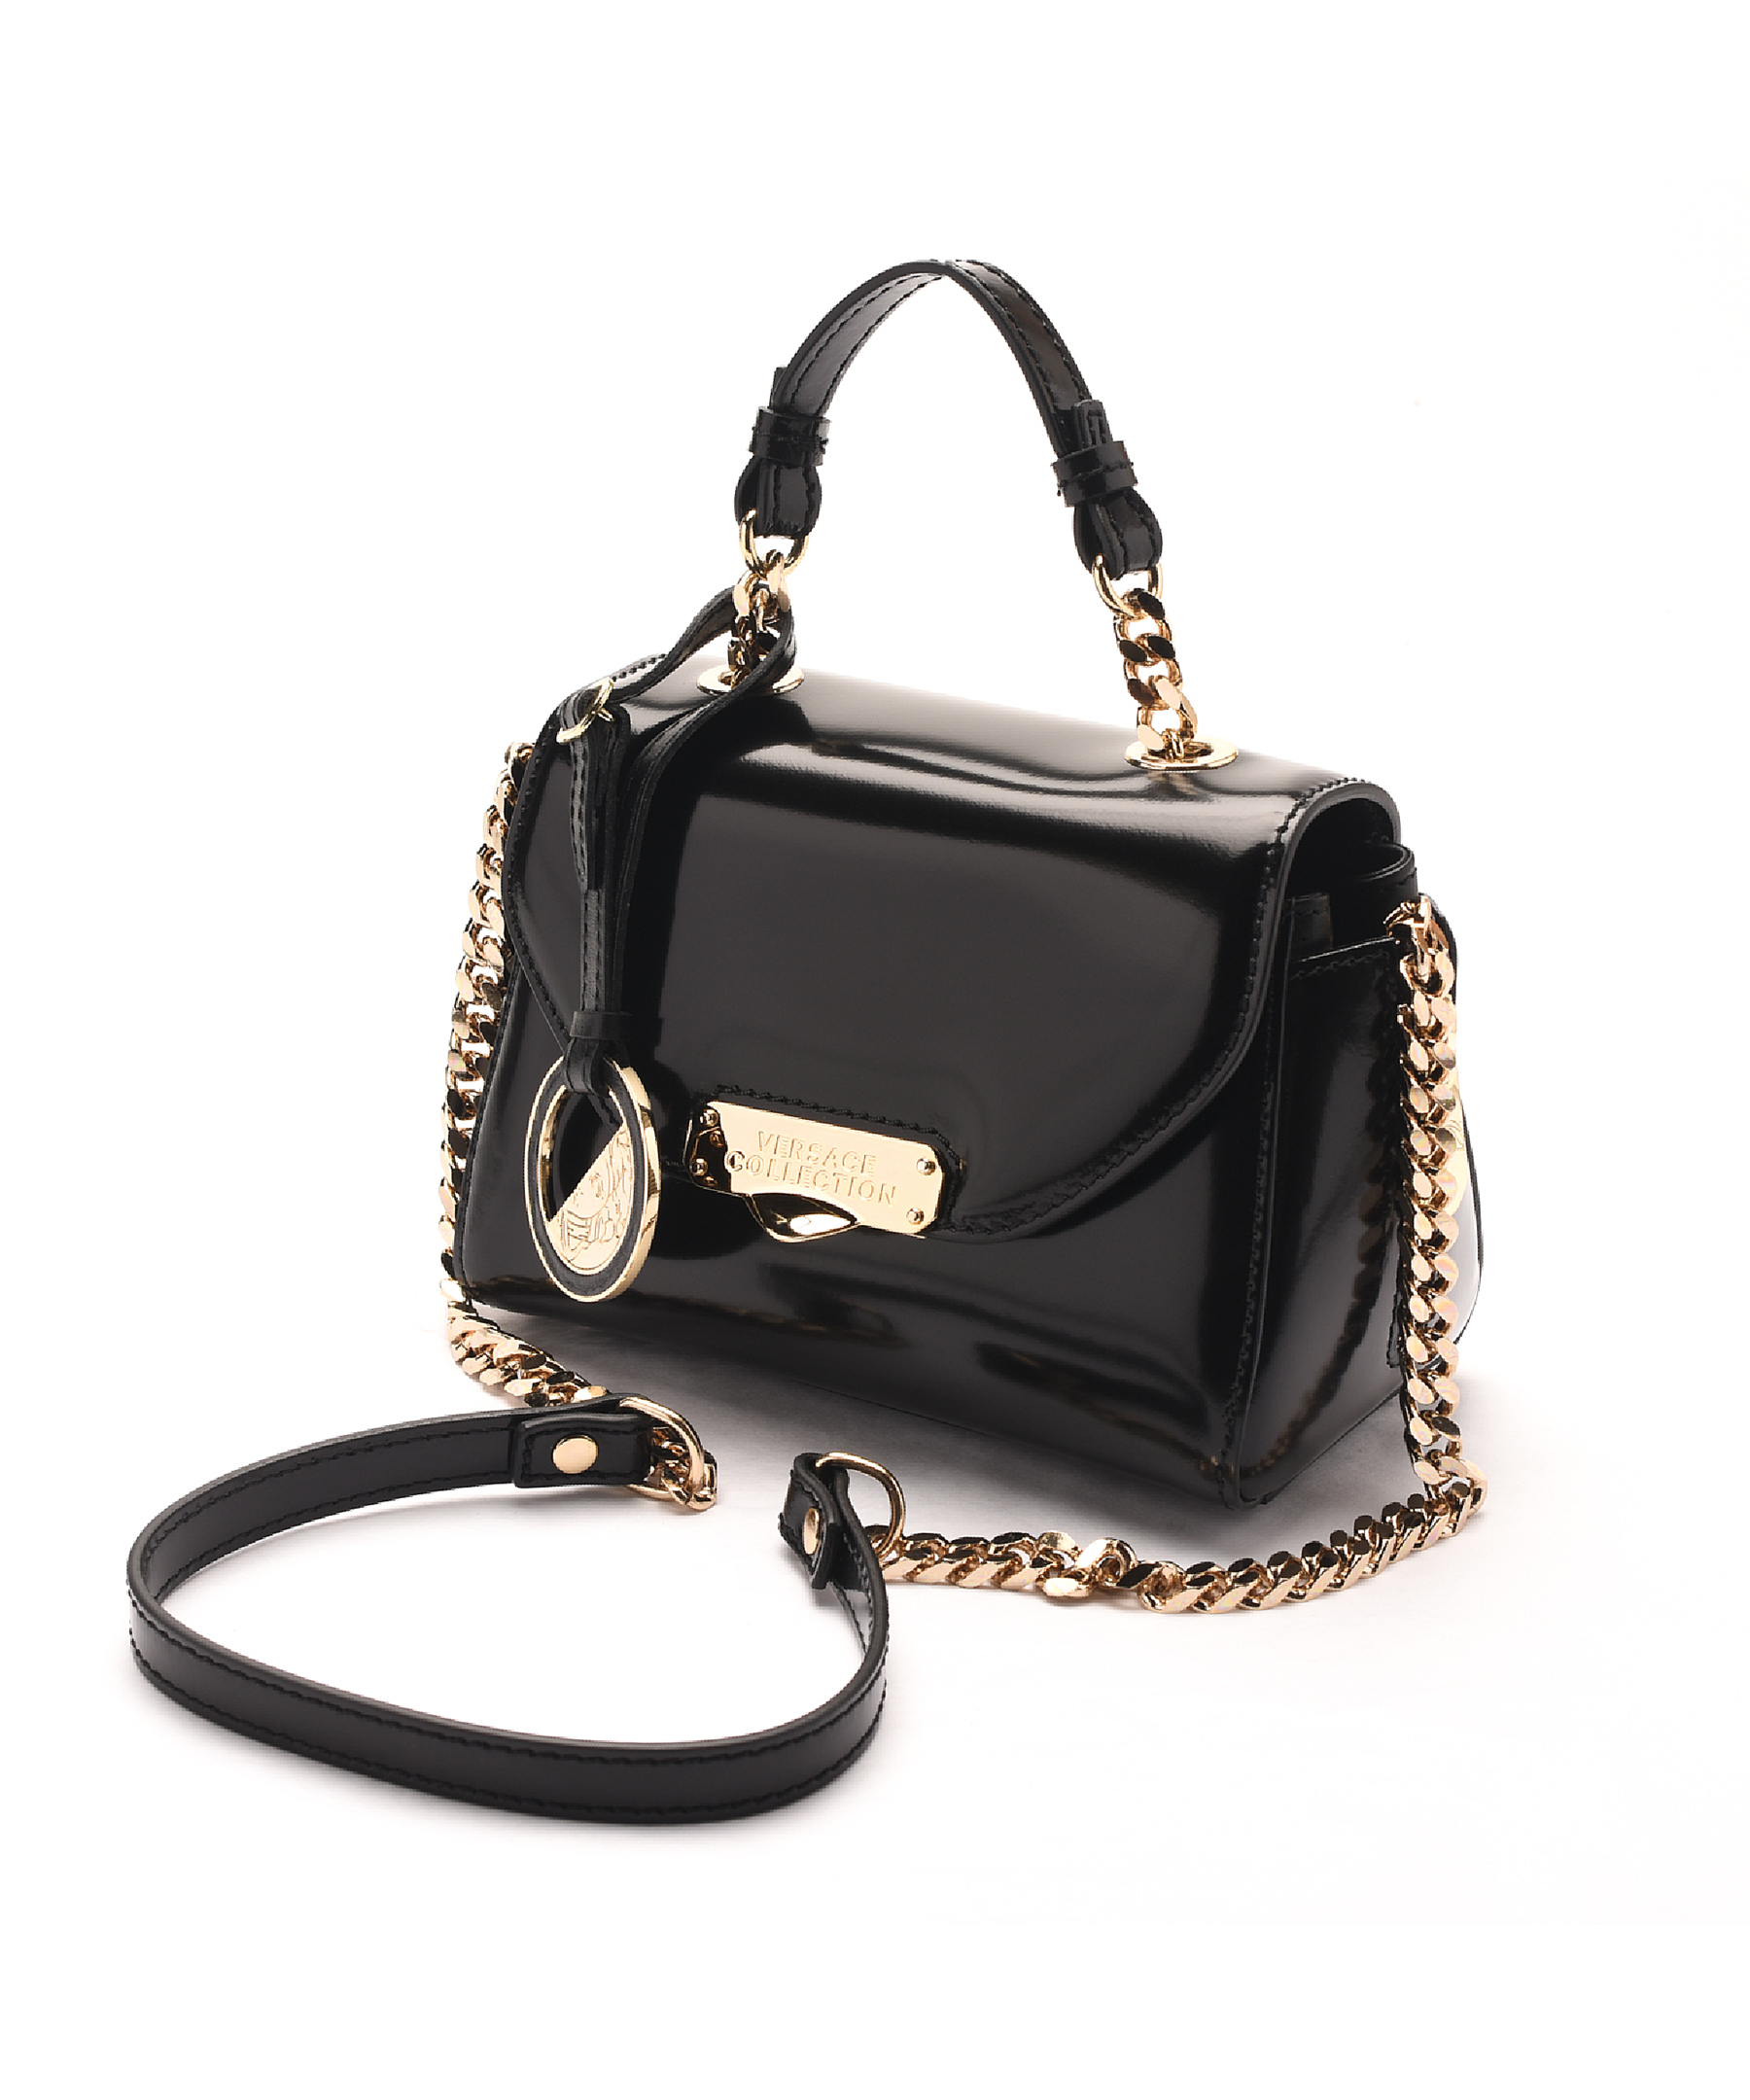 Versace Patent Leather Crossbody Clutch Handbag in Black | Lyst